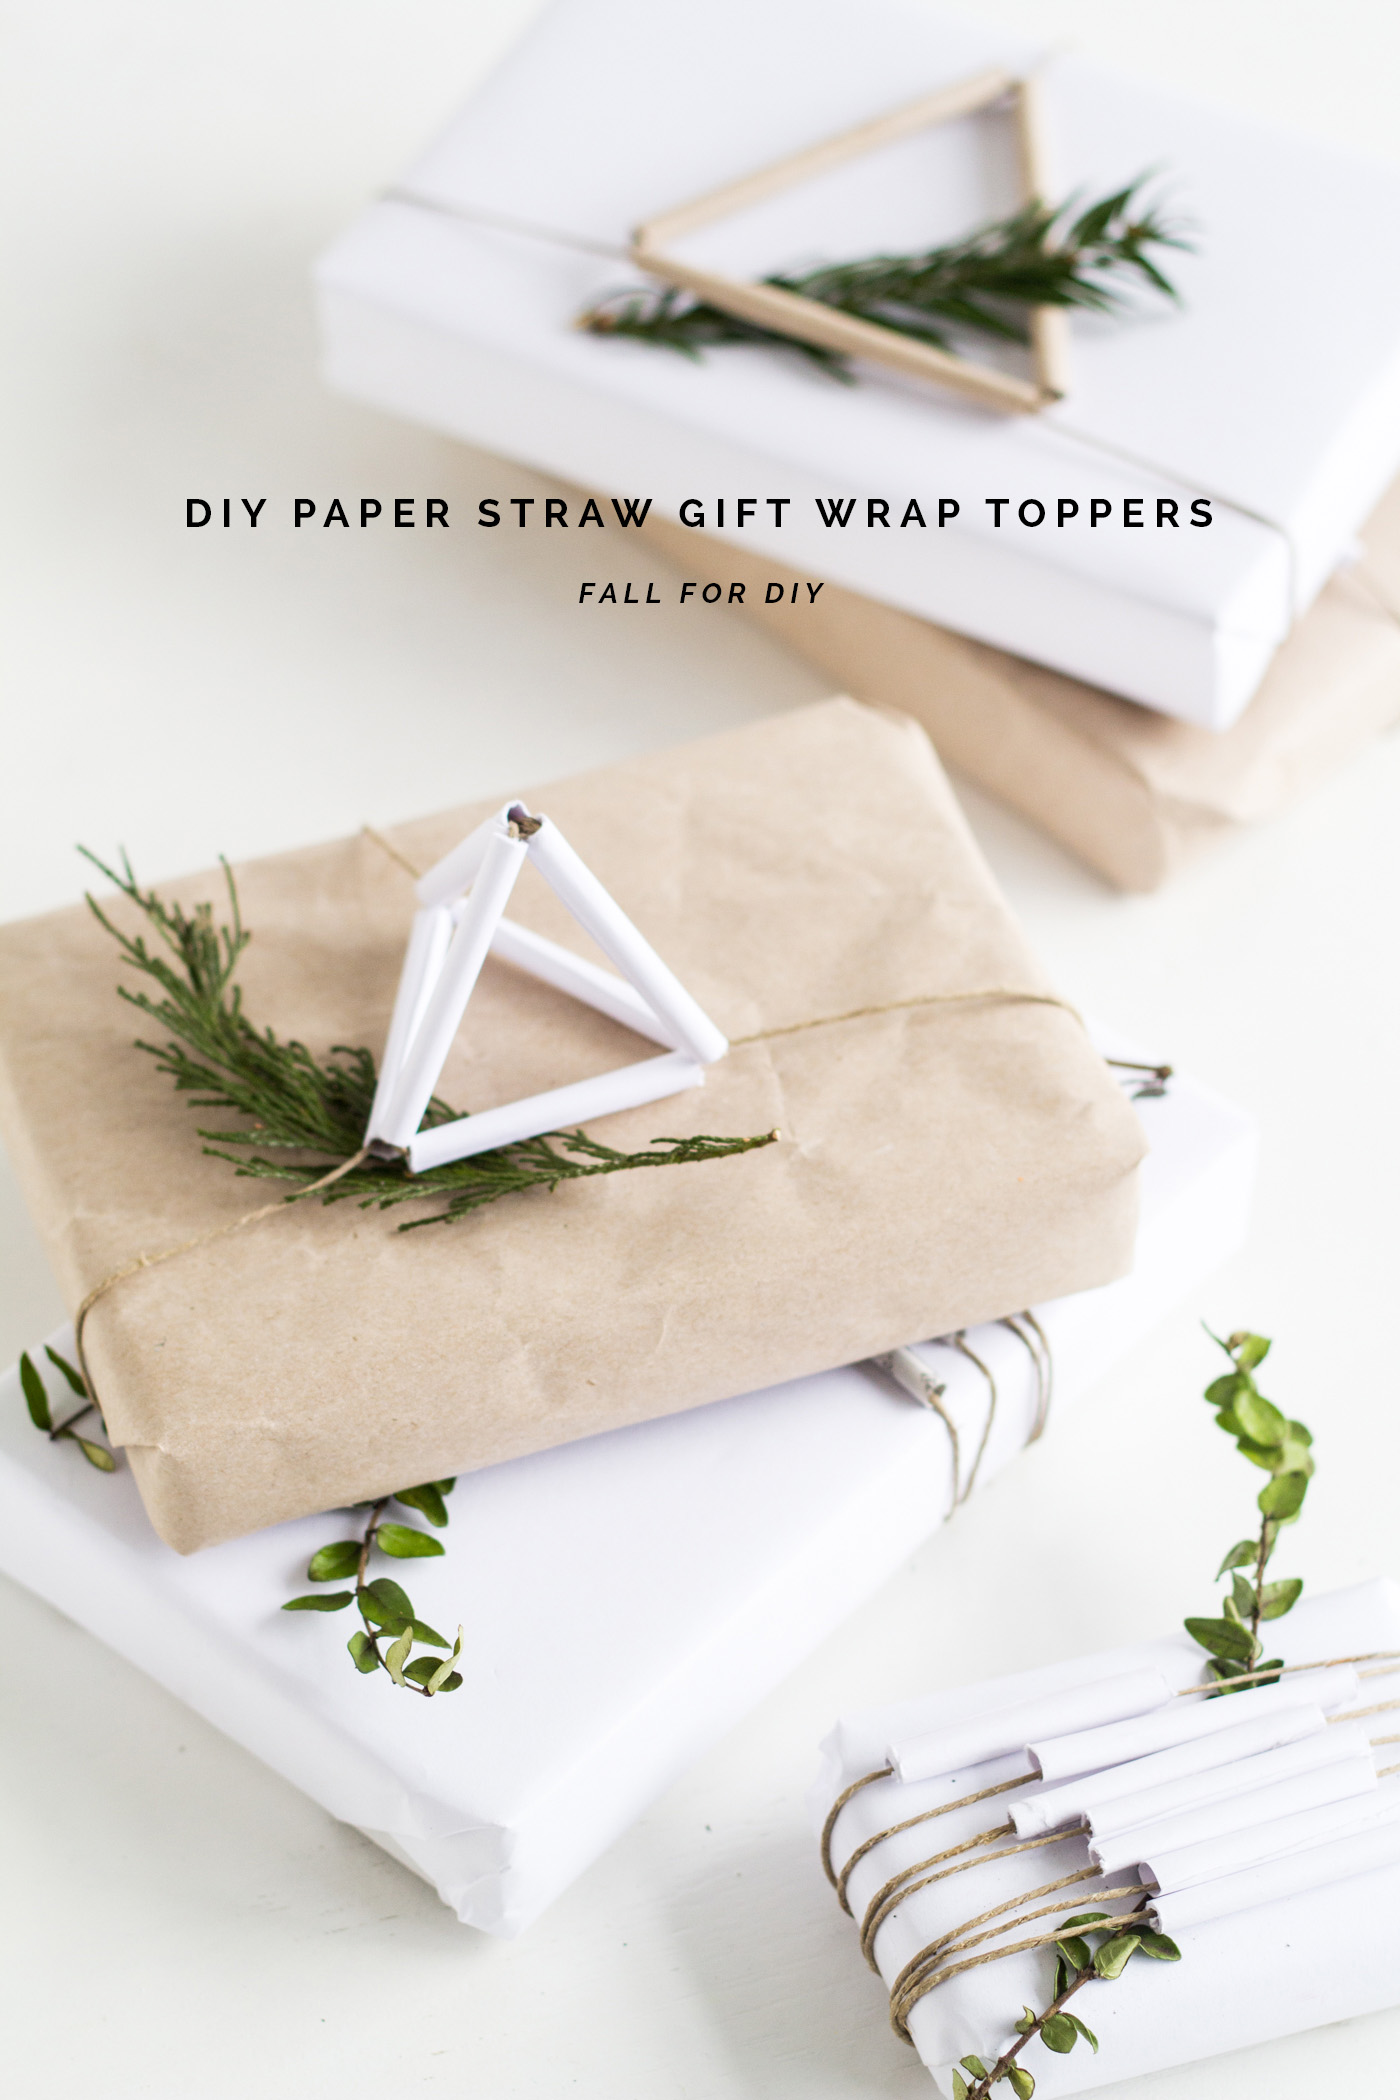 DIY Paper Straw Gift Wrap Topper Tutorial | @fallfordiy